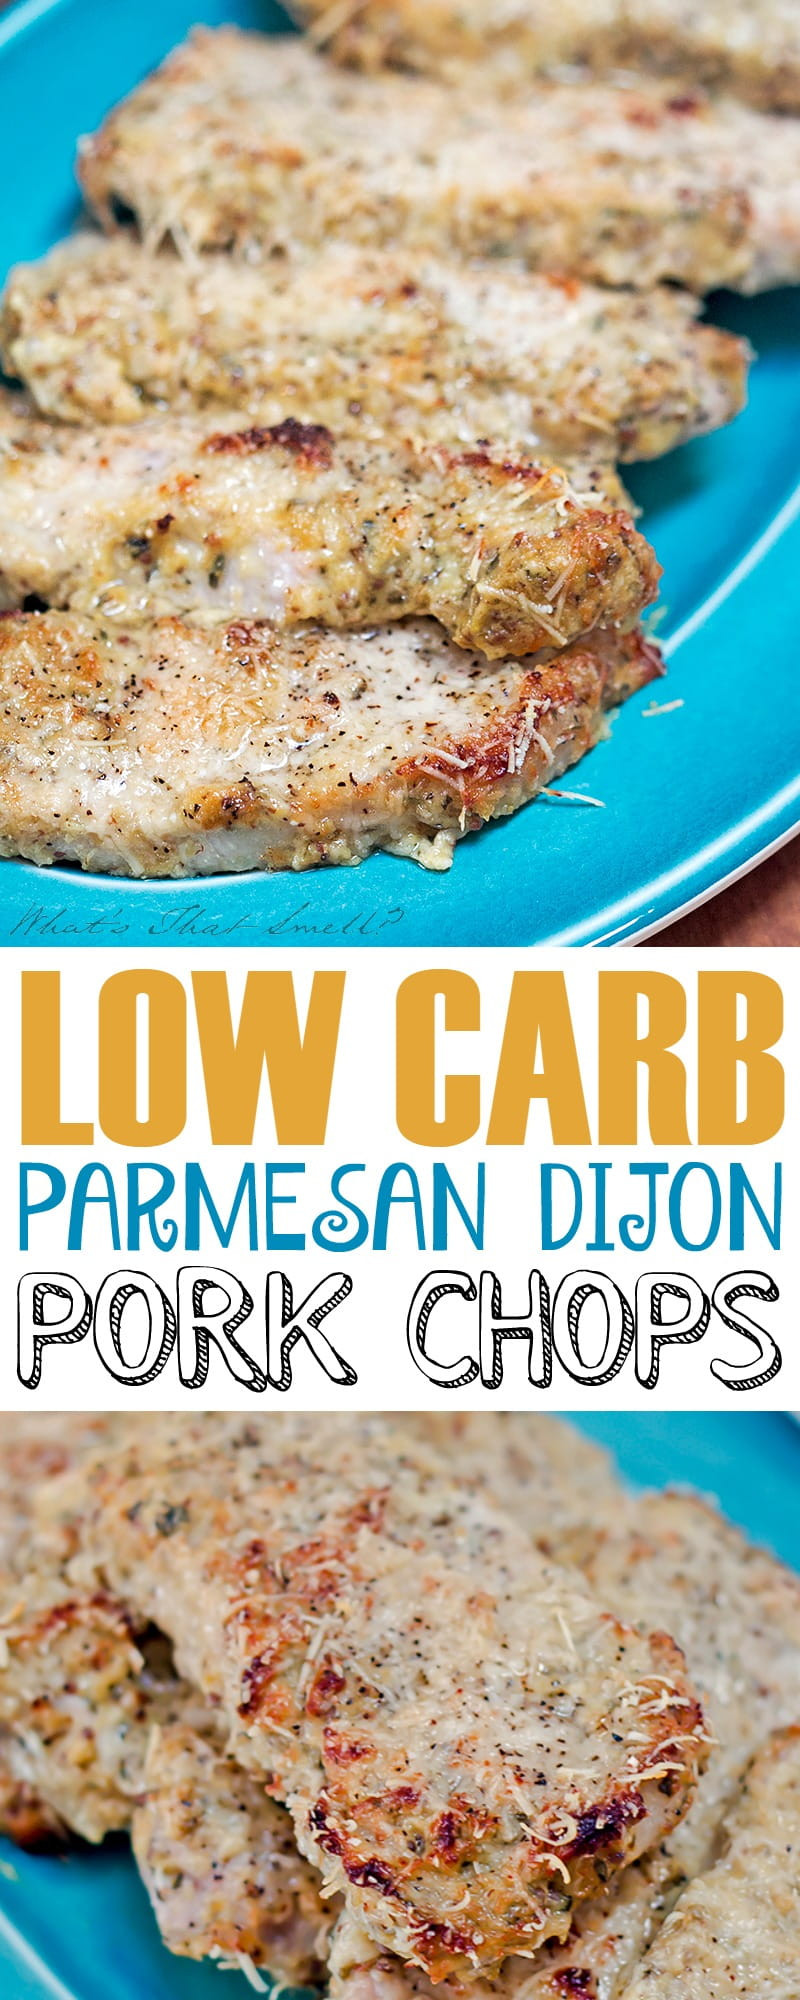 Low Calorie Pork Chop Recipes
 Low Carb Parmesan Dijon Pork Chops 730 Sage Street